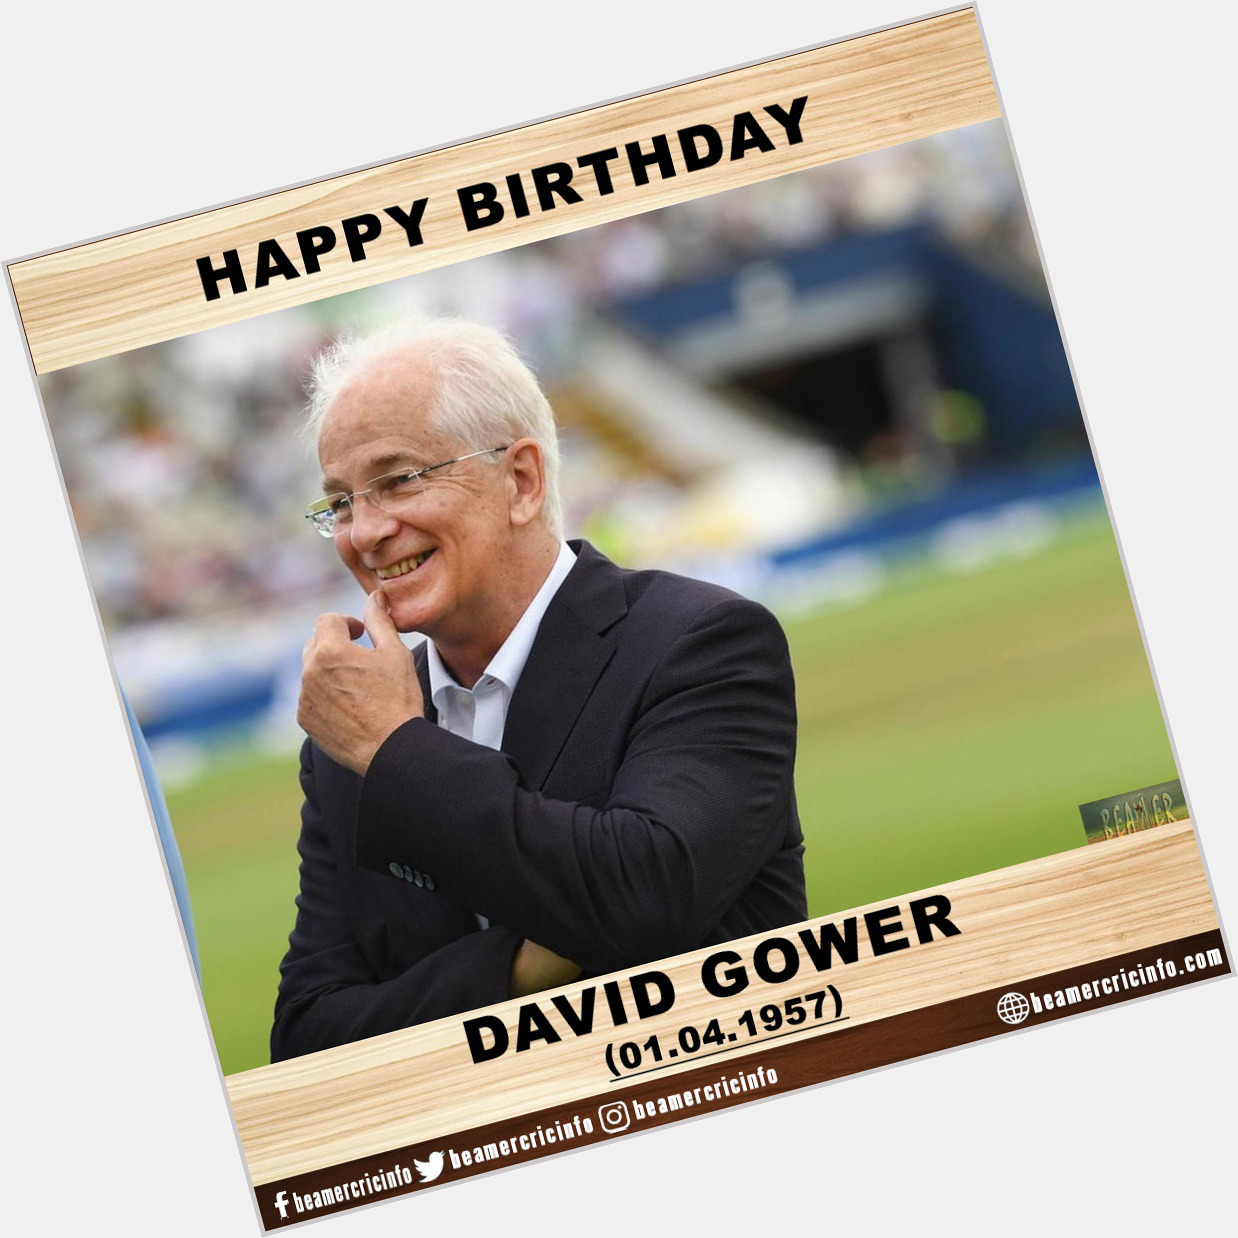 Happy Birthday!!!
David Gower...     